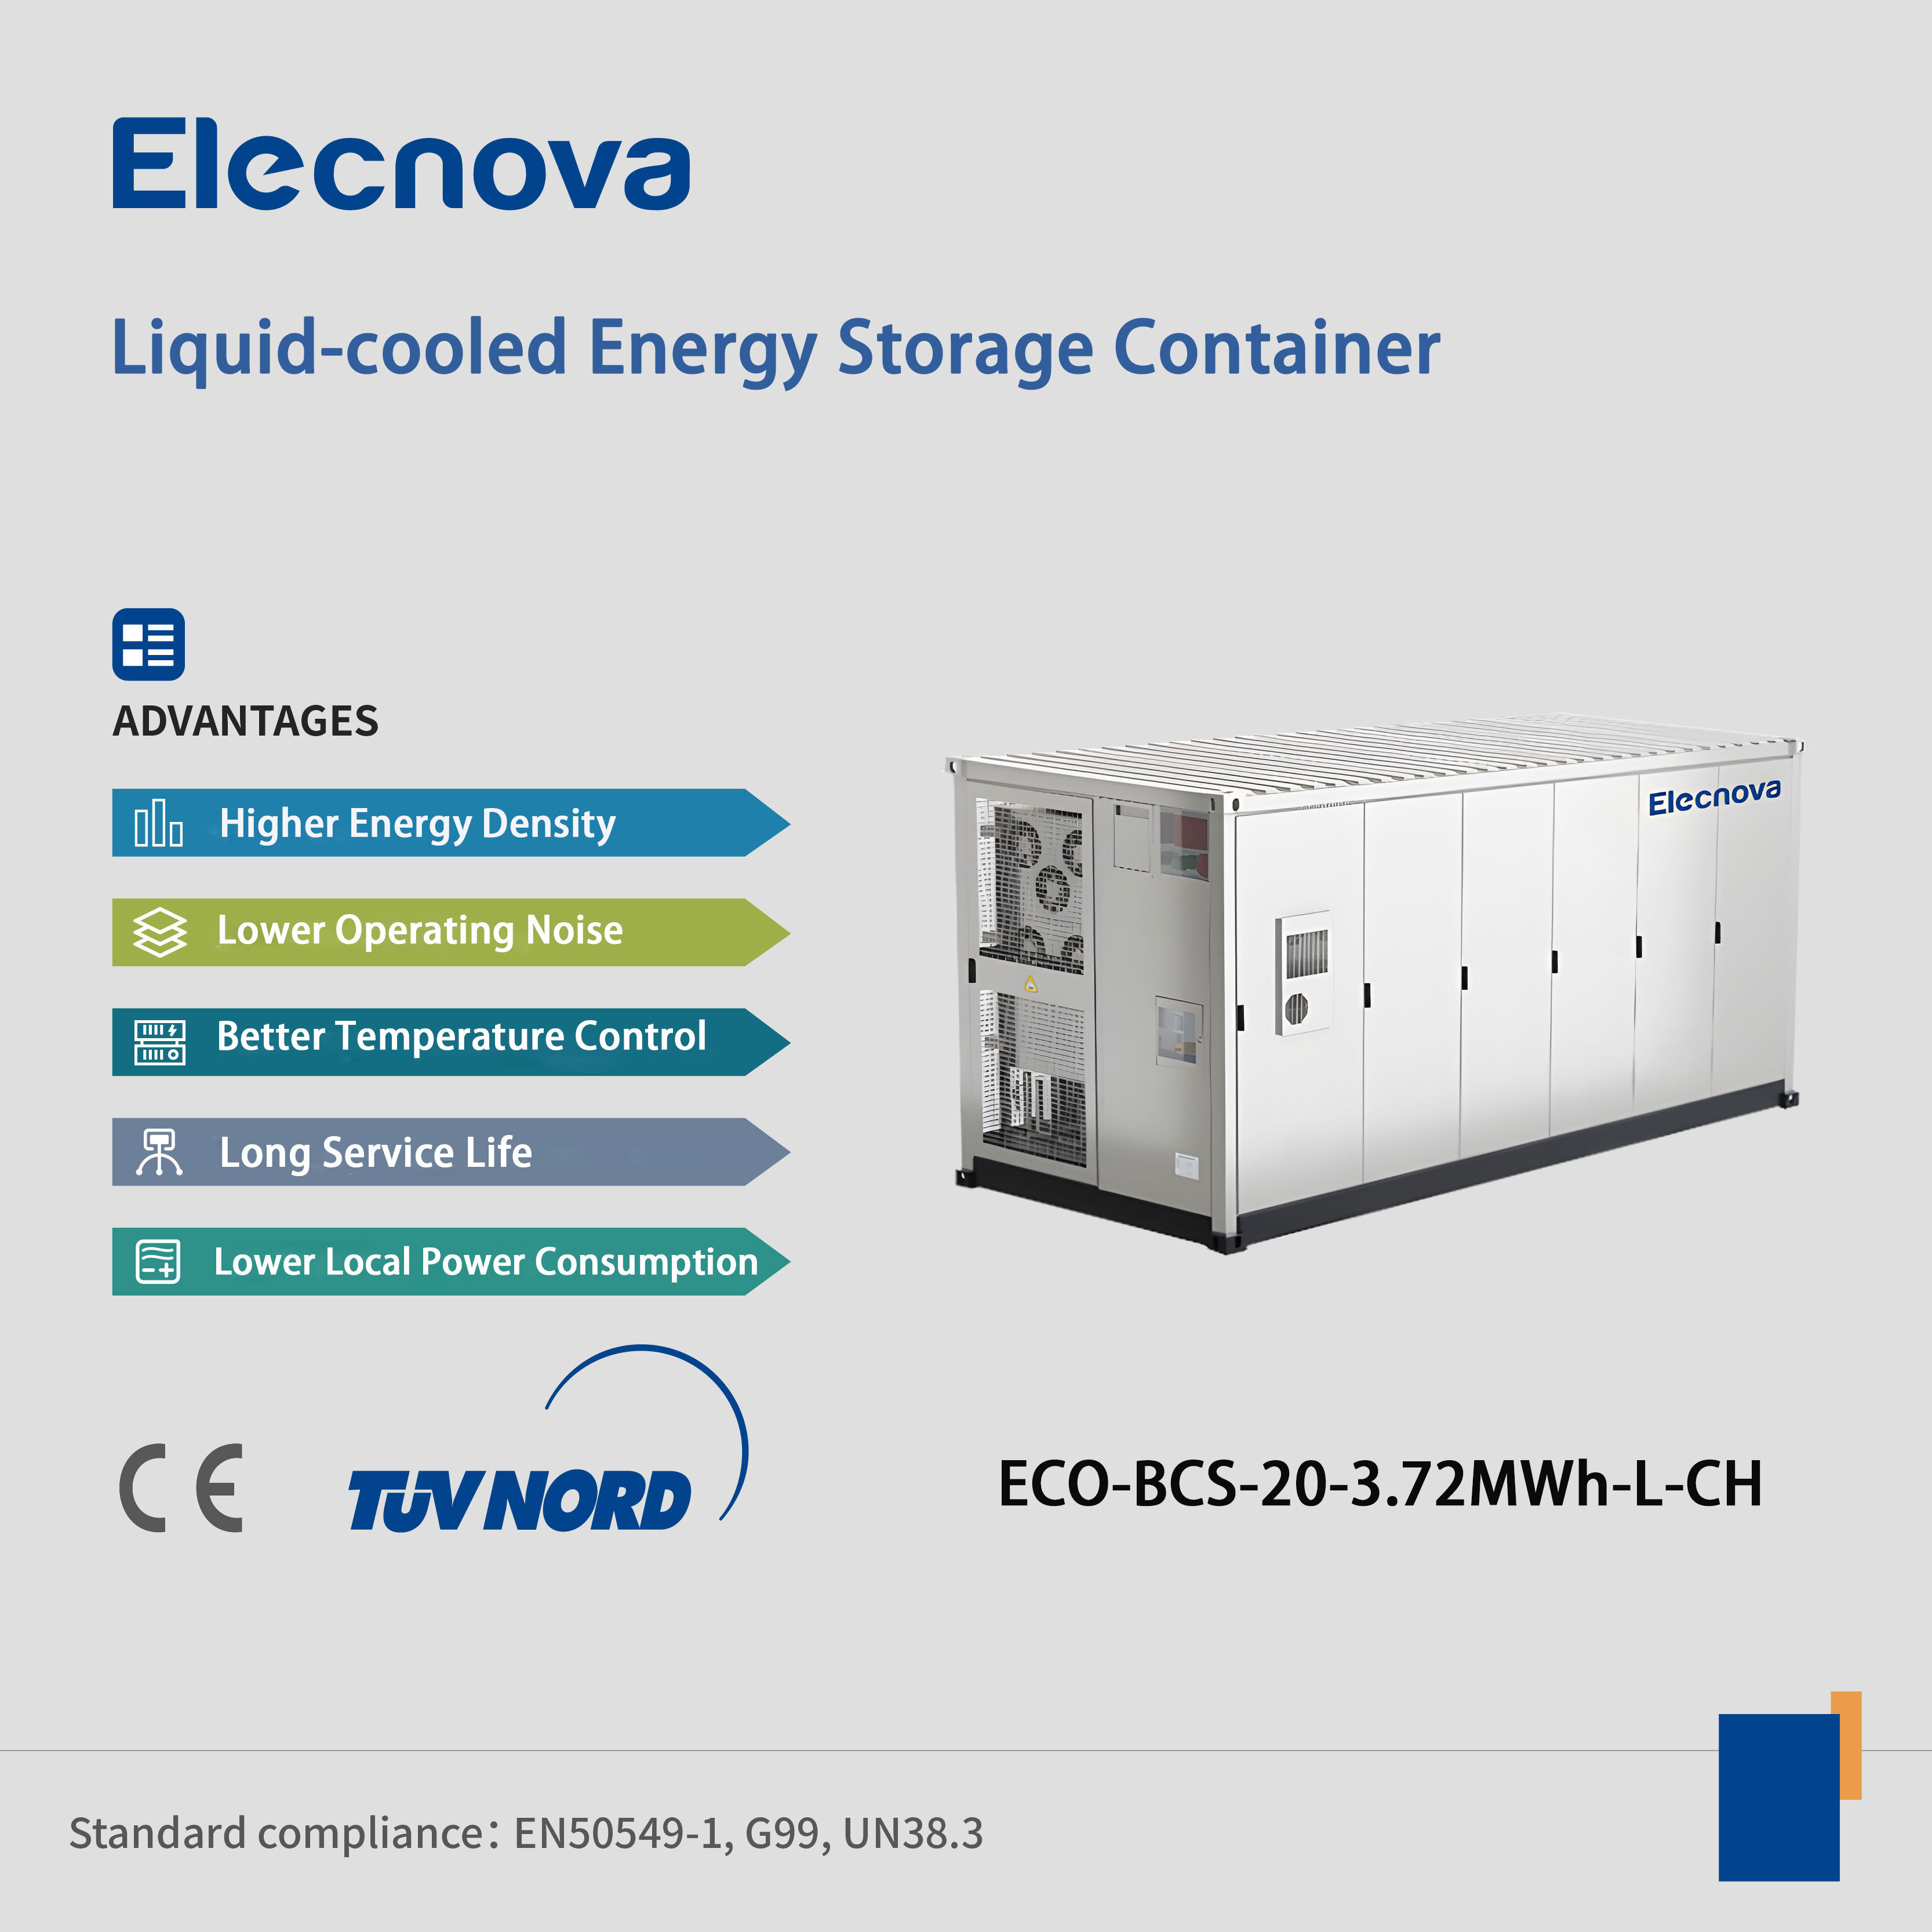 ESS energy storage